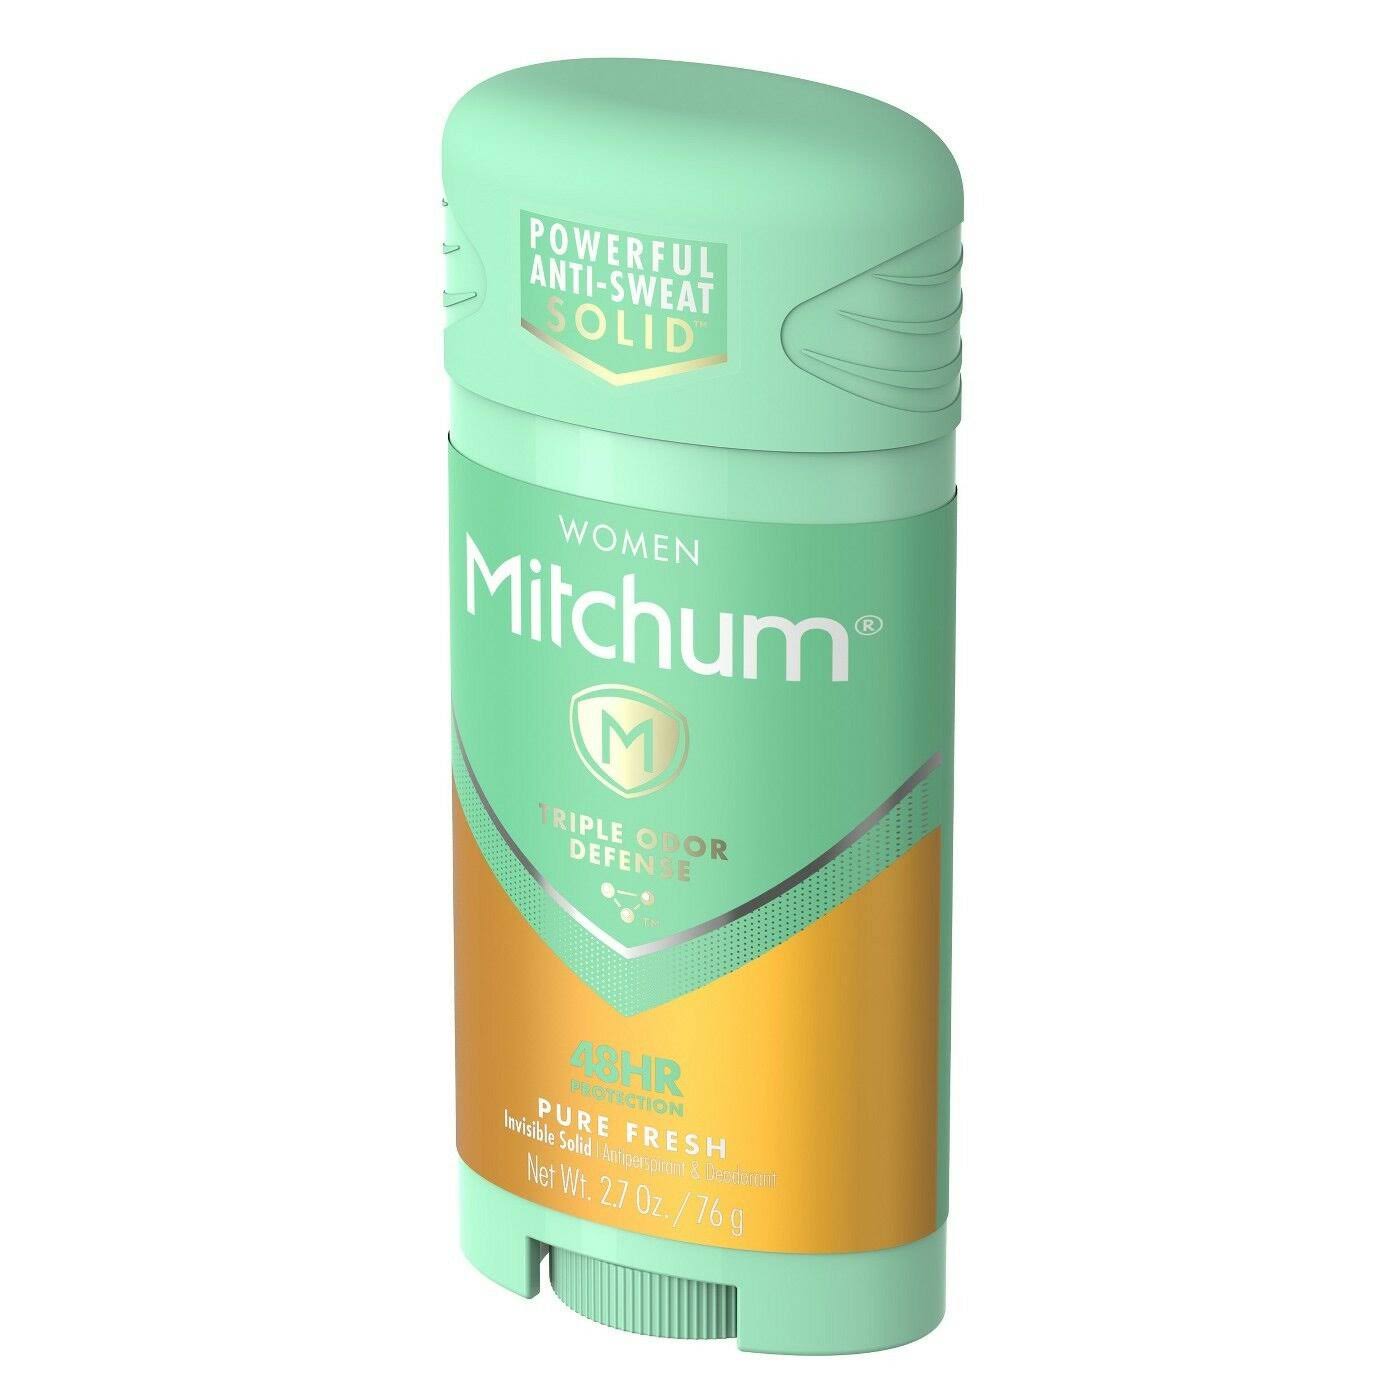 Mitchum for Women Advanced Control Anti-Perspirant and Deodorant - Pure Fresh, 2.7oz